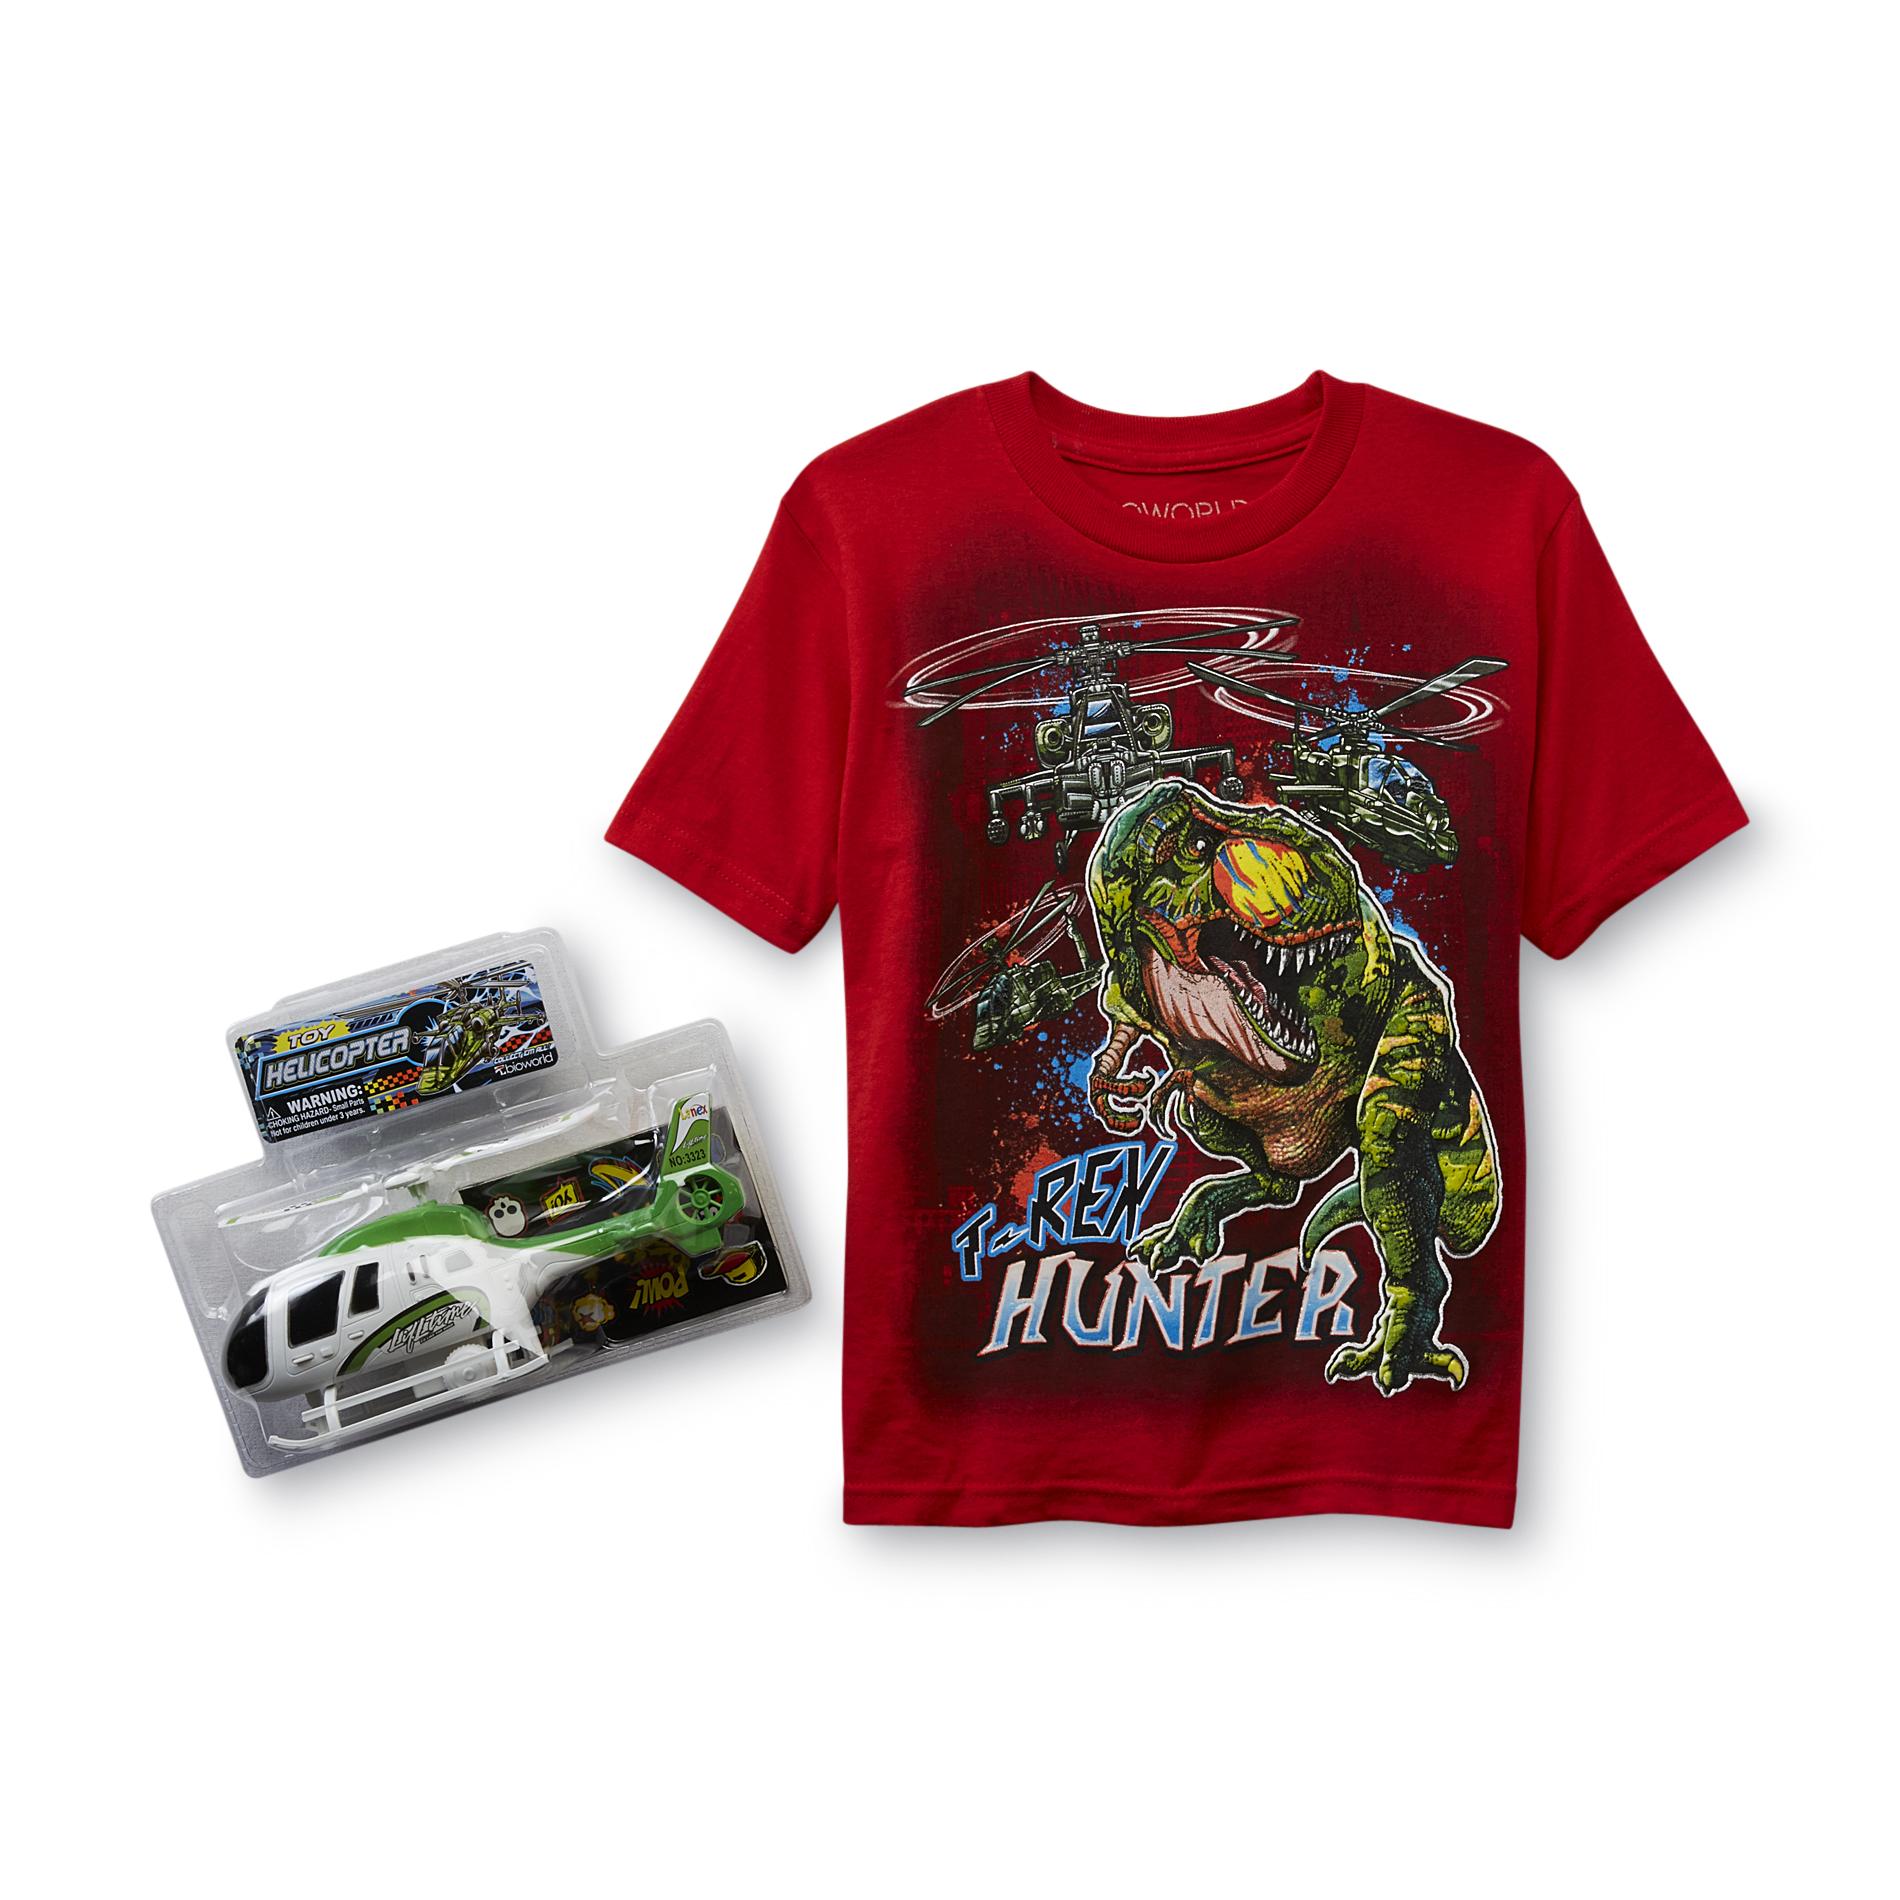 Boy's Graphic T-Shirt & Water Blaster Toy - Shark